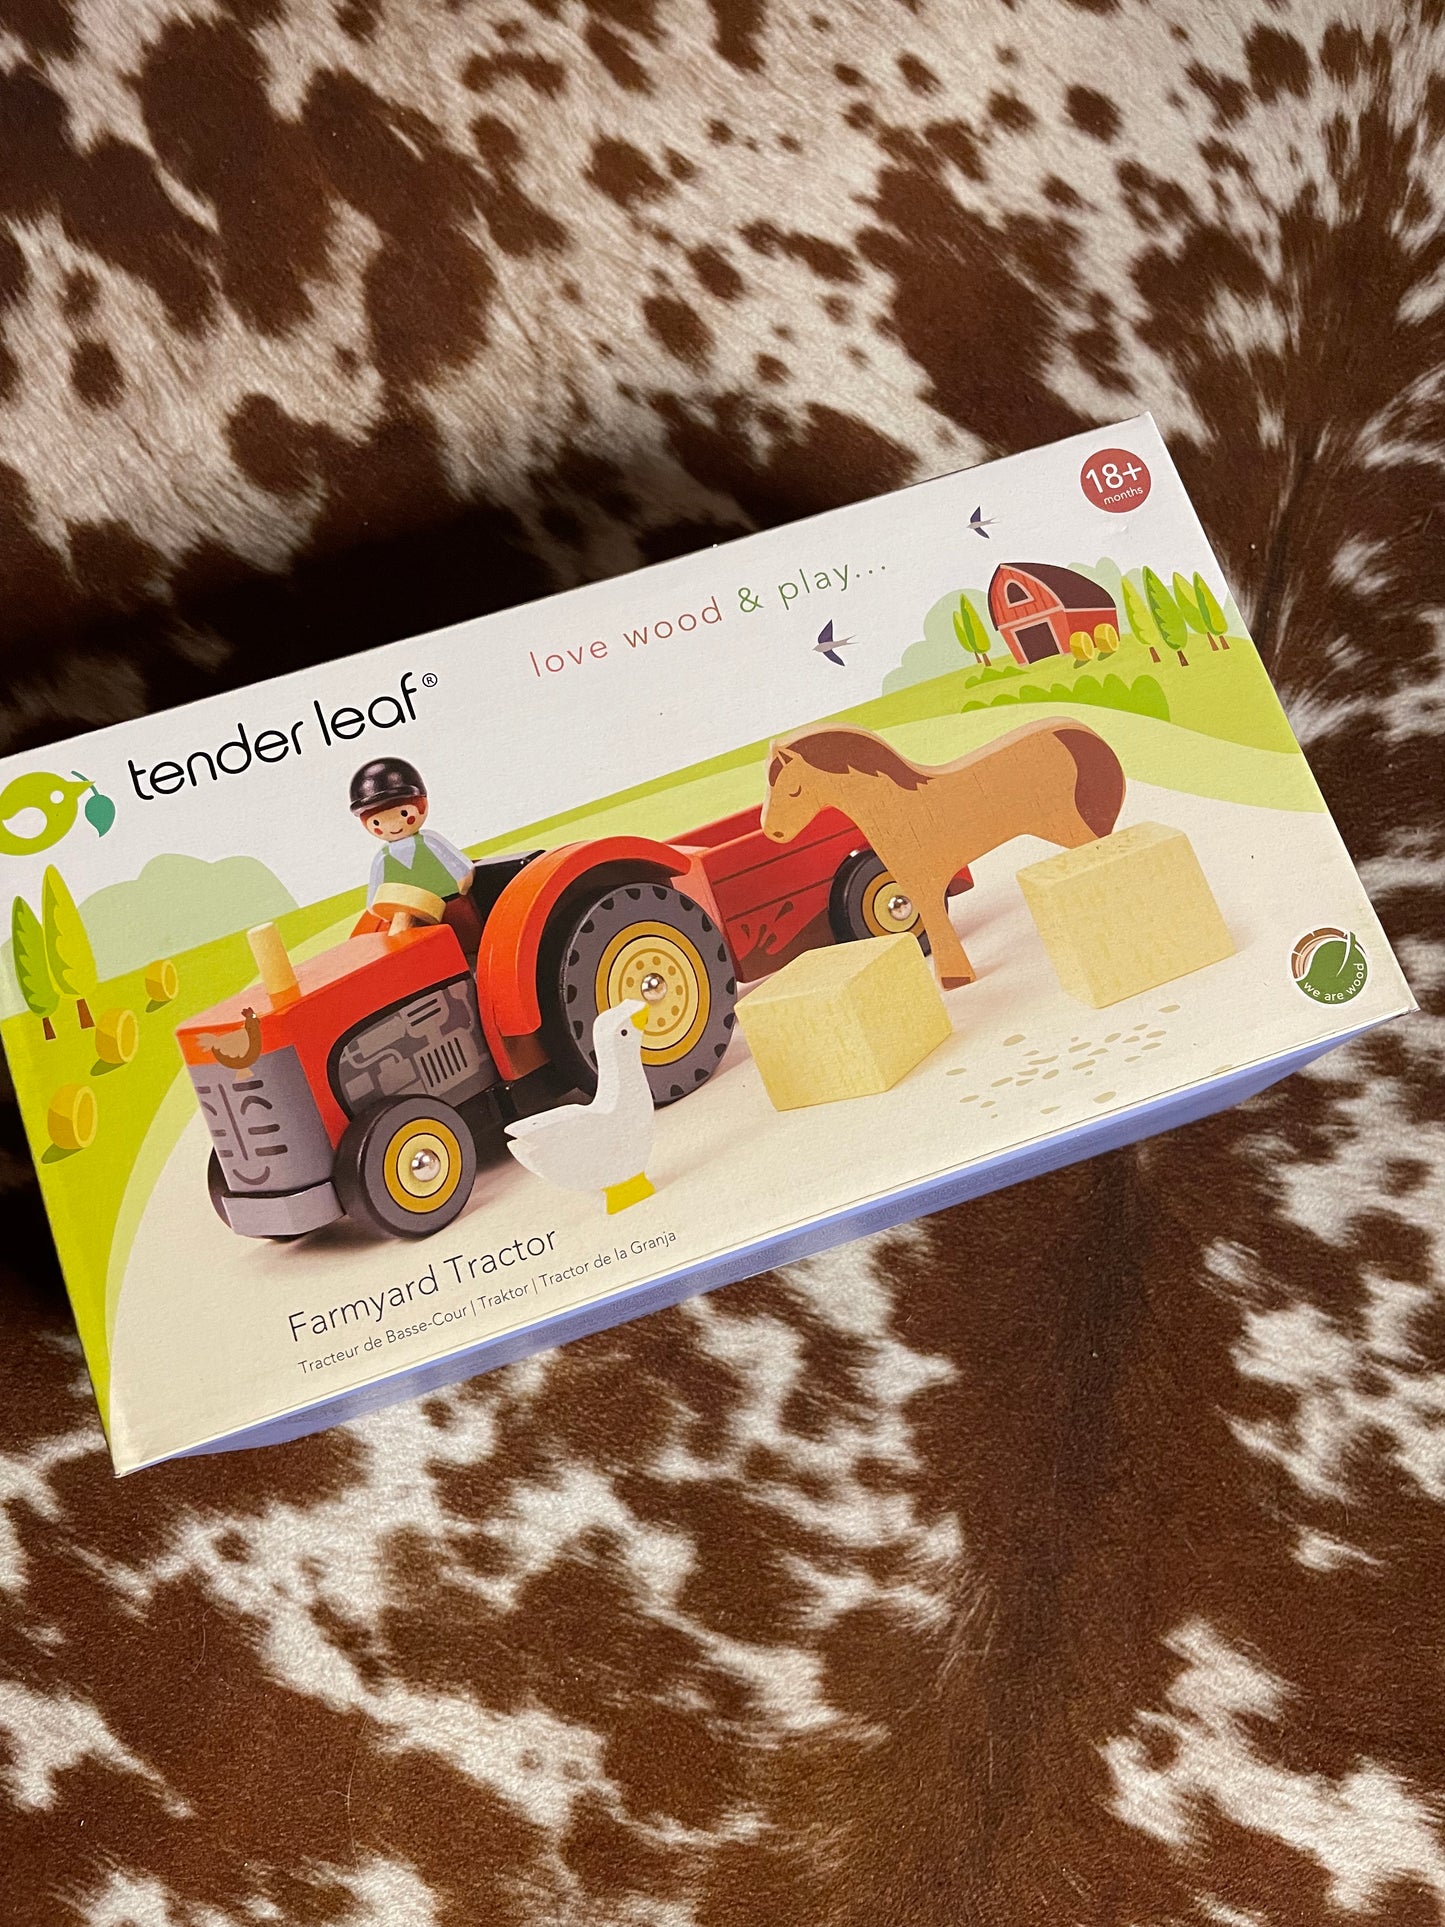 Farmyard Tractor Play Set